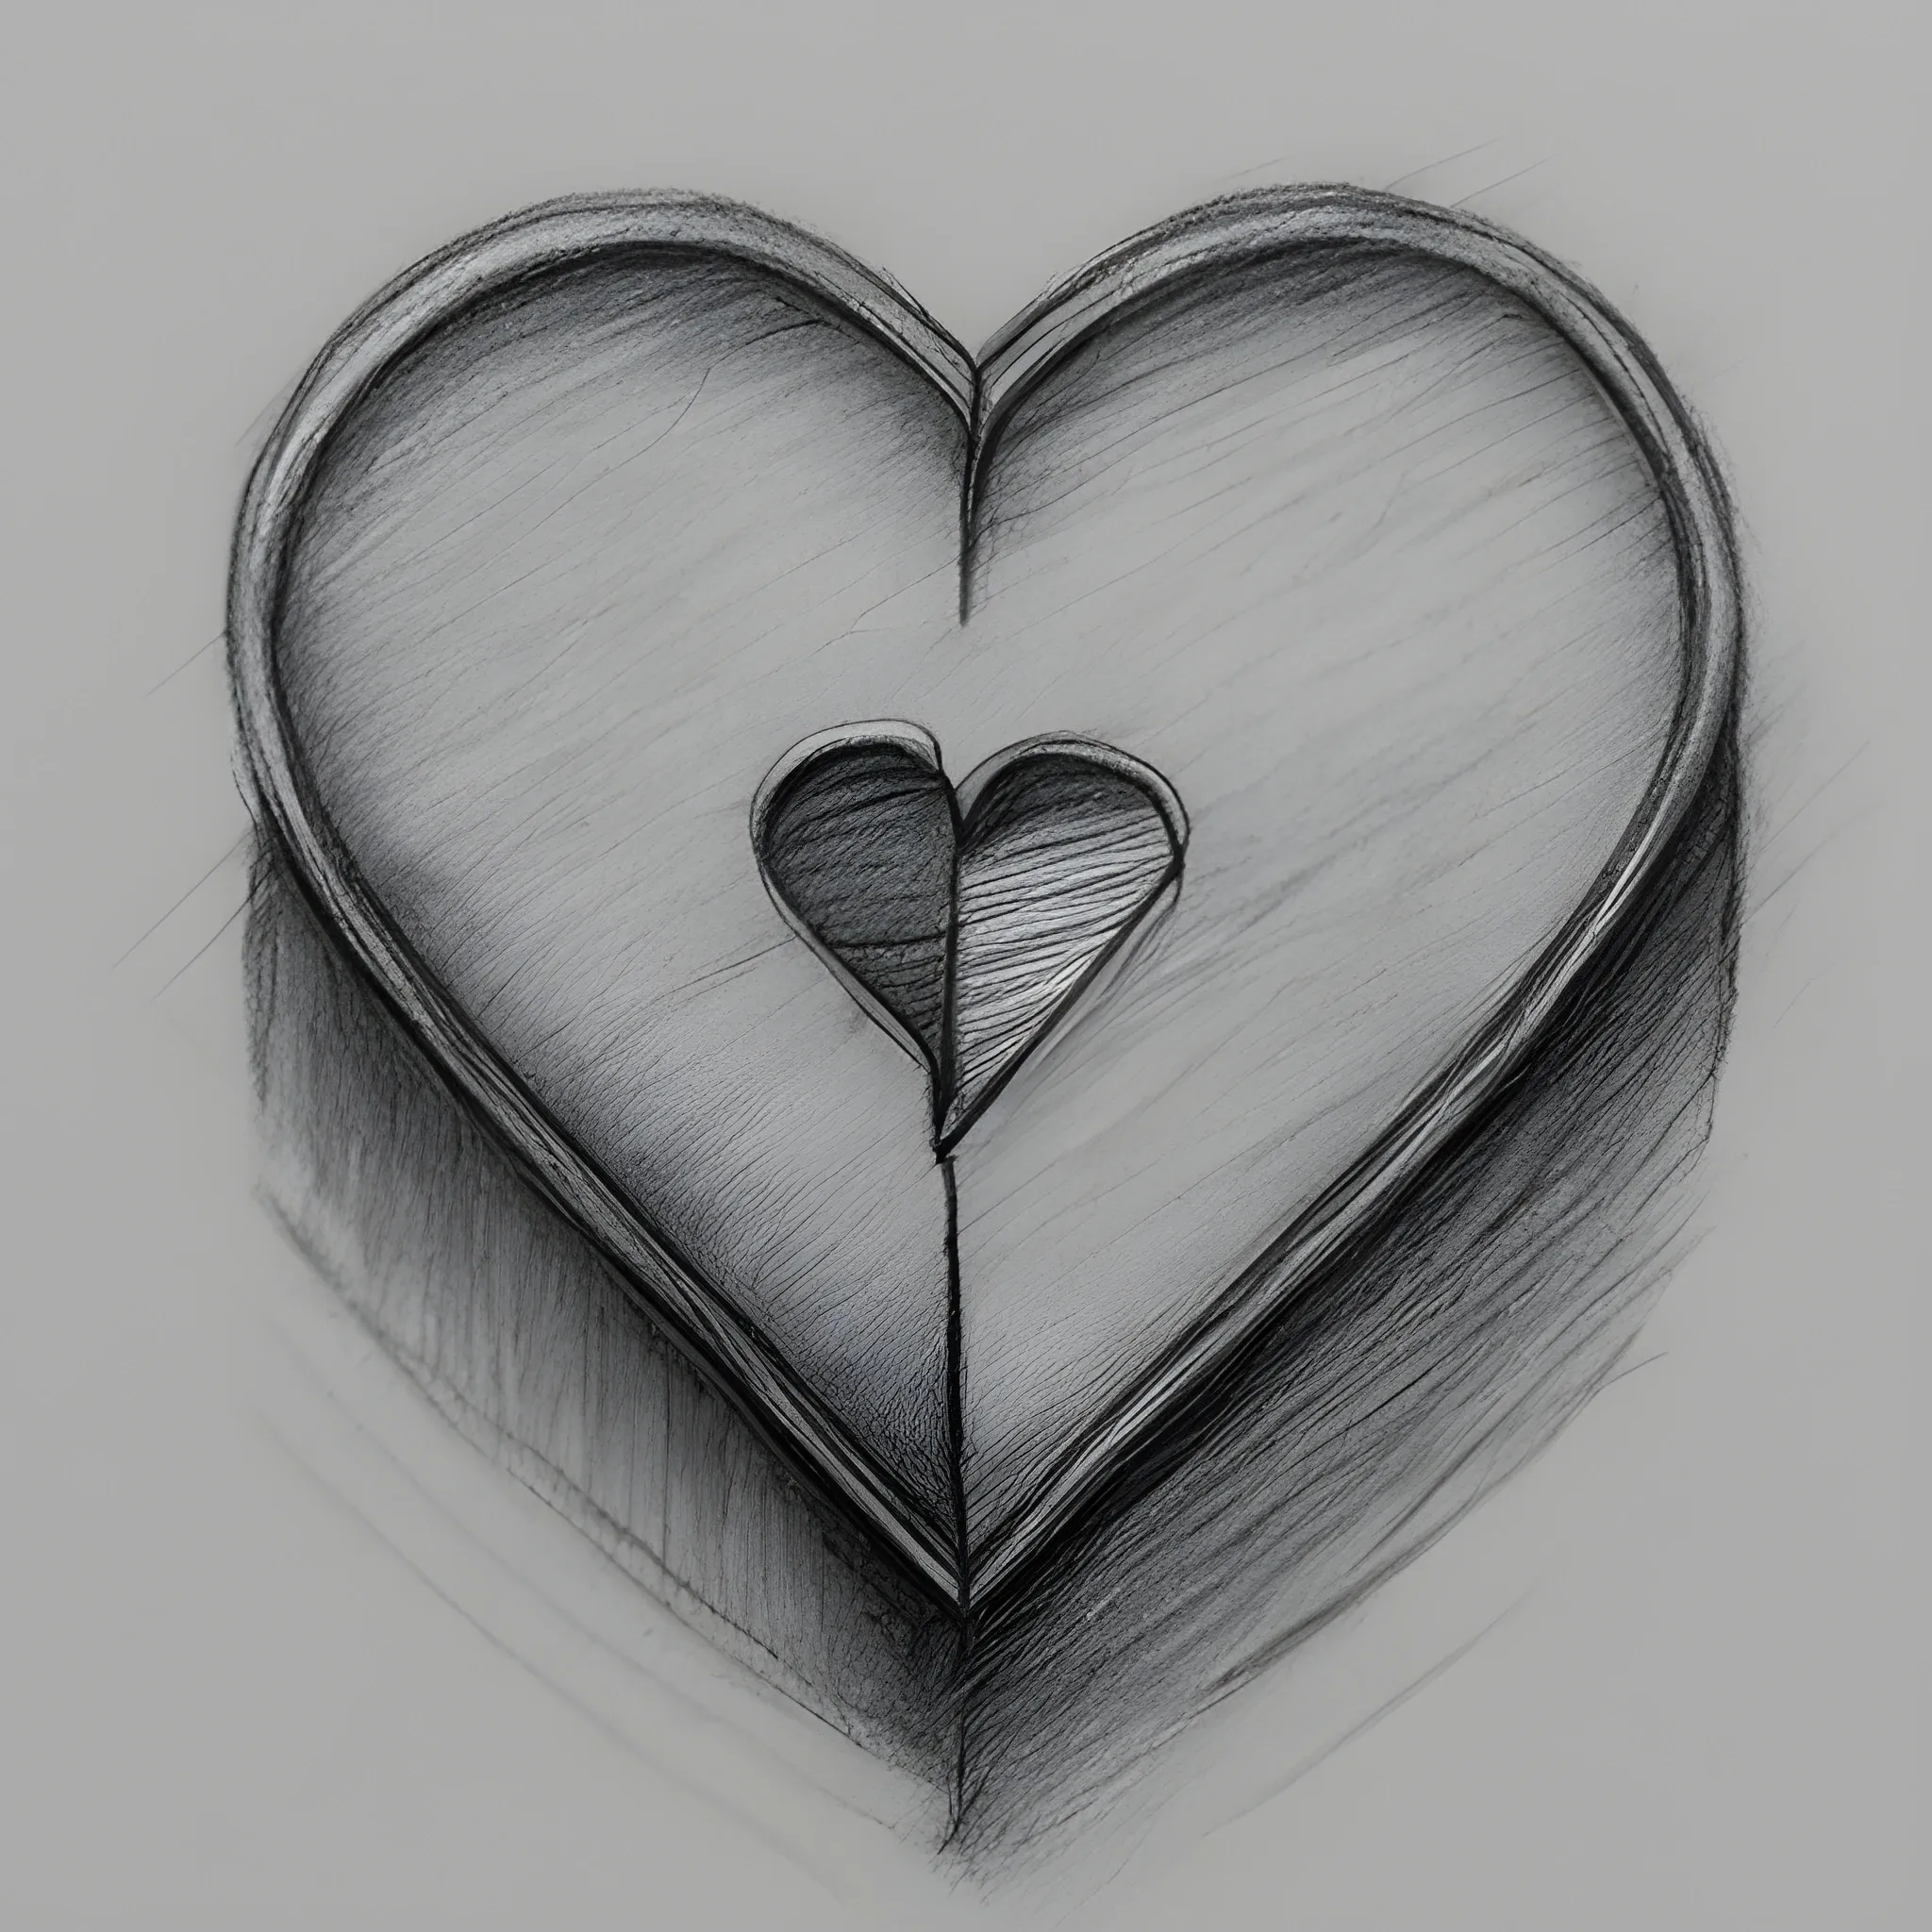 Broken Heart, Pencil Sketch - Arthub.ai